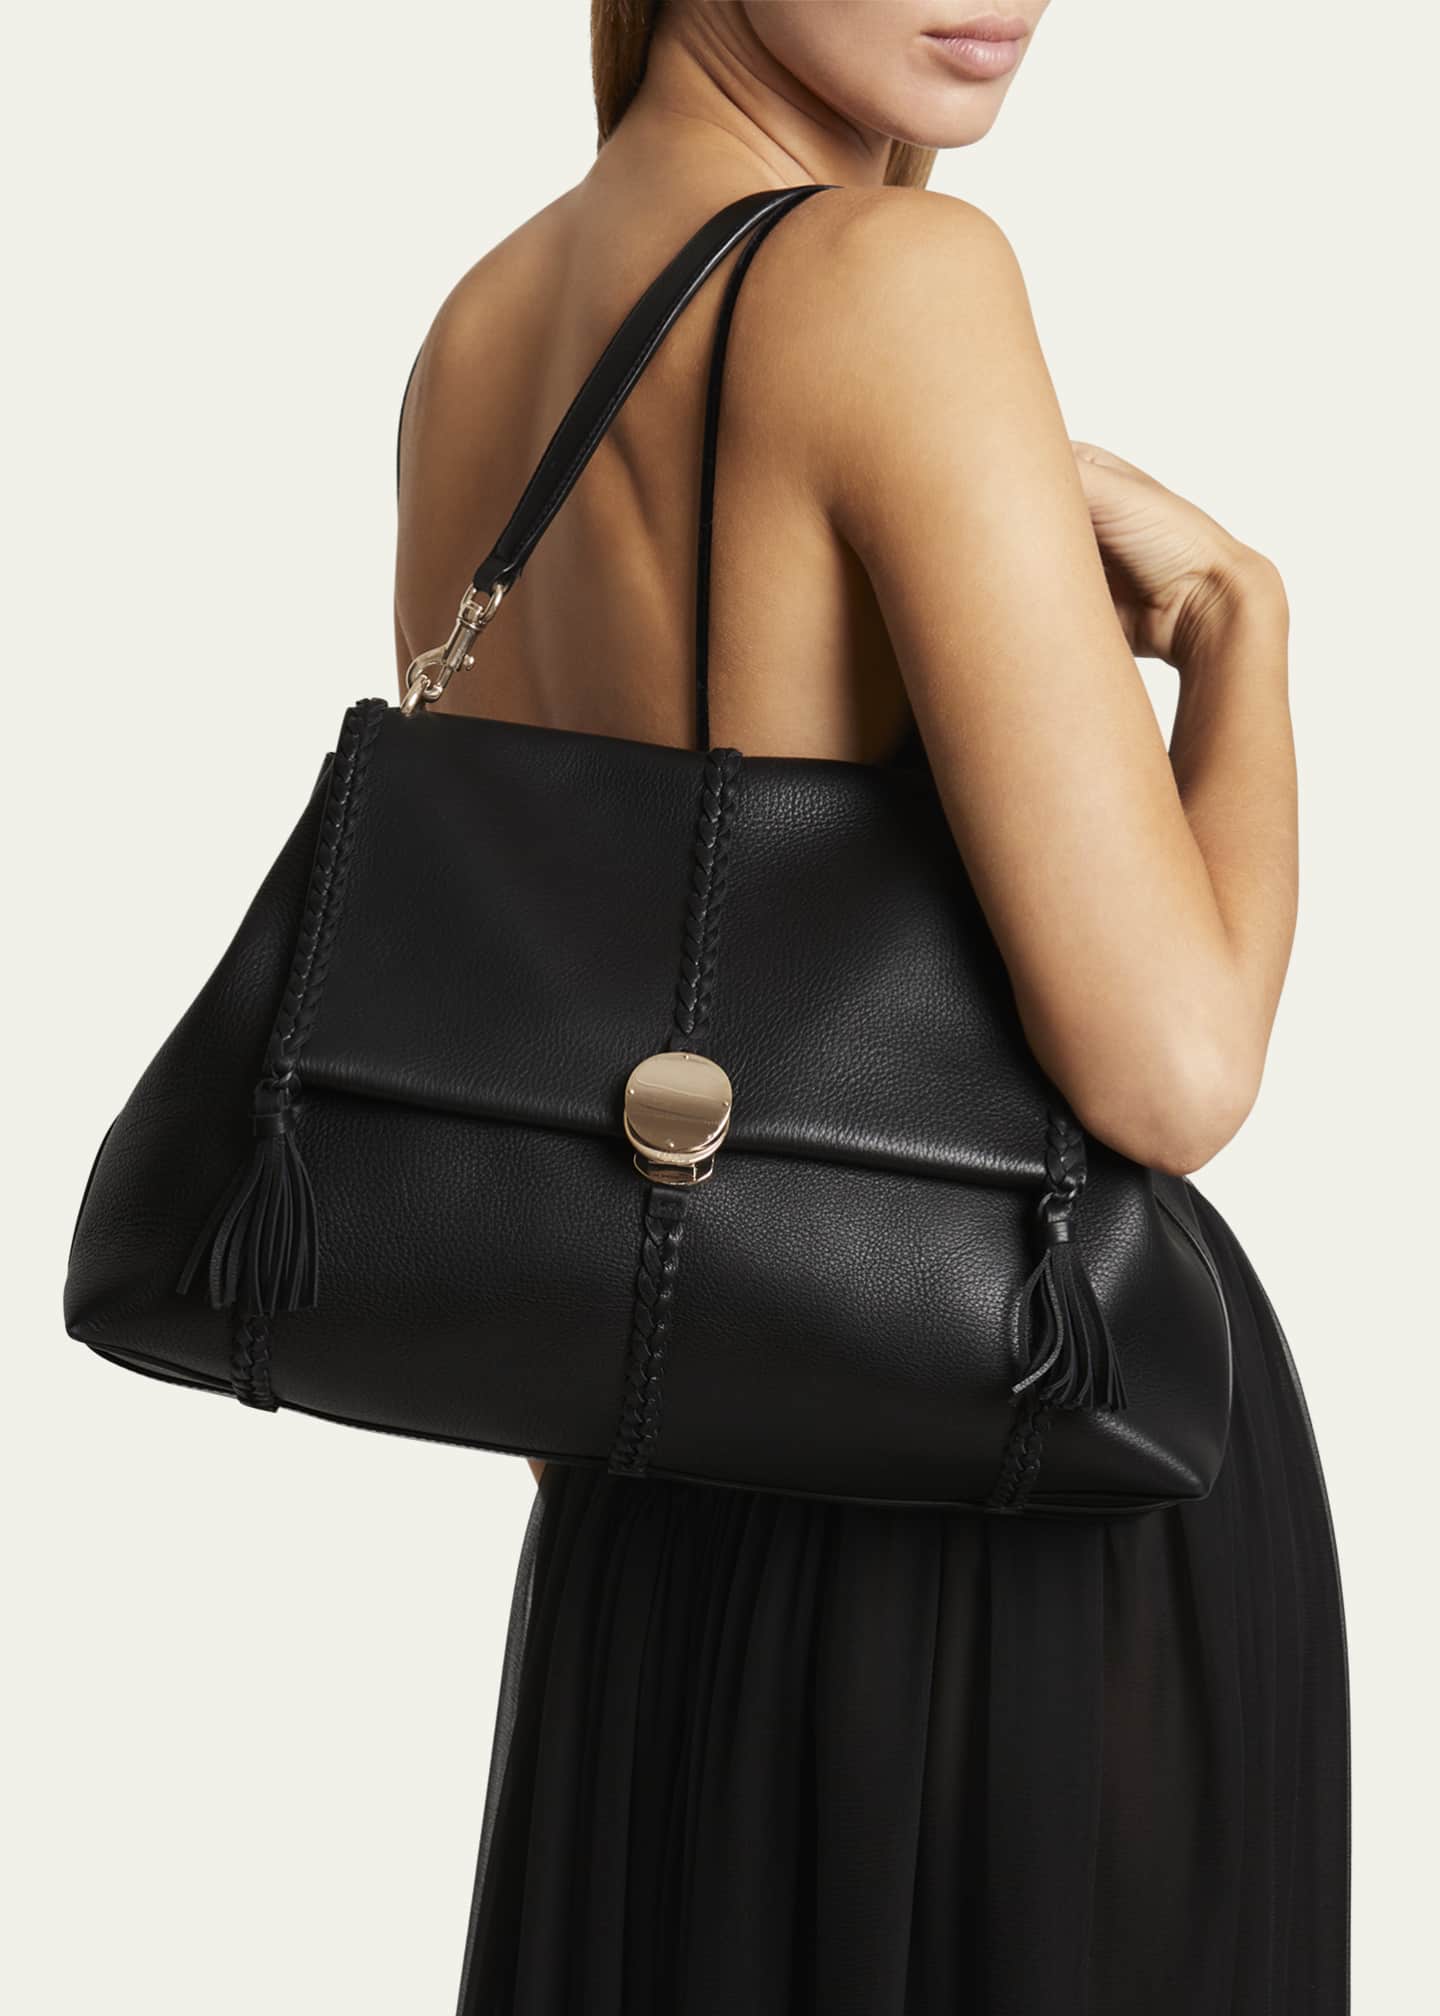 Chloe Penelope Medium Top-Handle Bag in Smooth Grained Leather ...